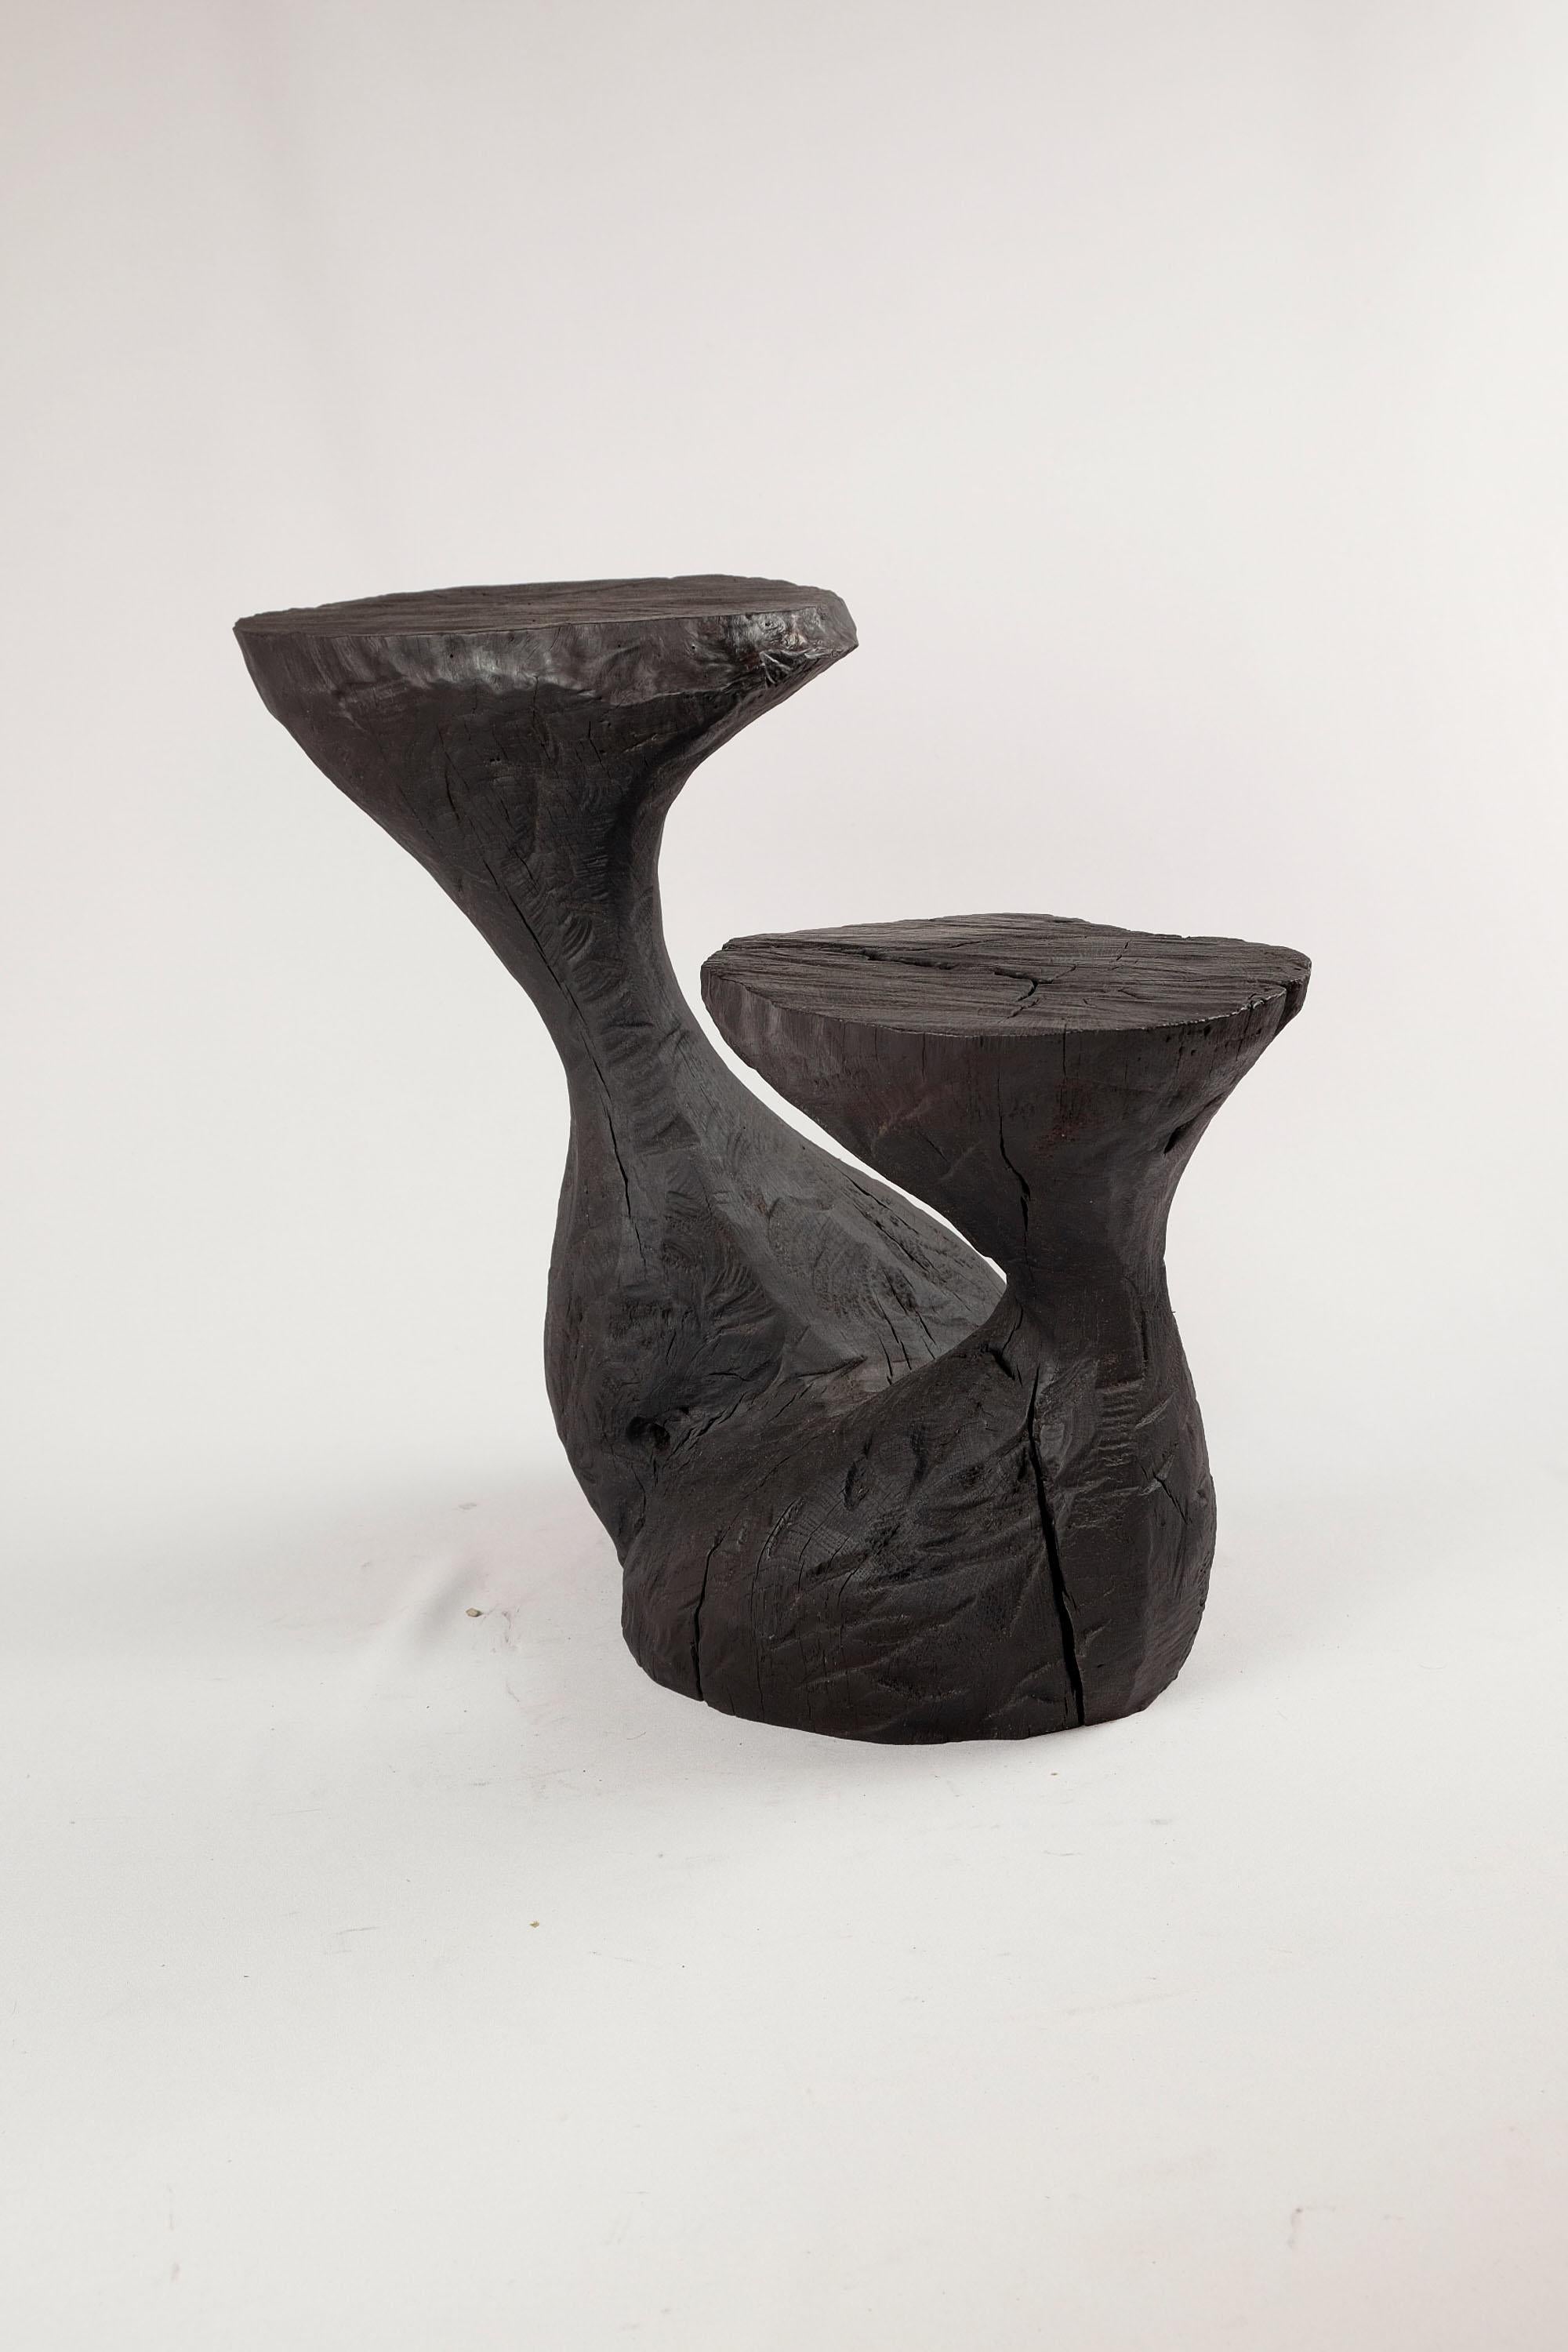 Solid Burnt Wood, Sculptural Side Table, Original Contemporary Design, Logniture For Sale 2